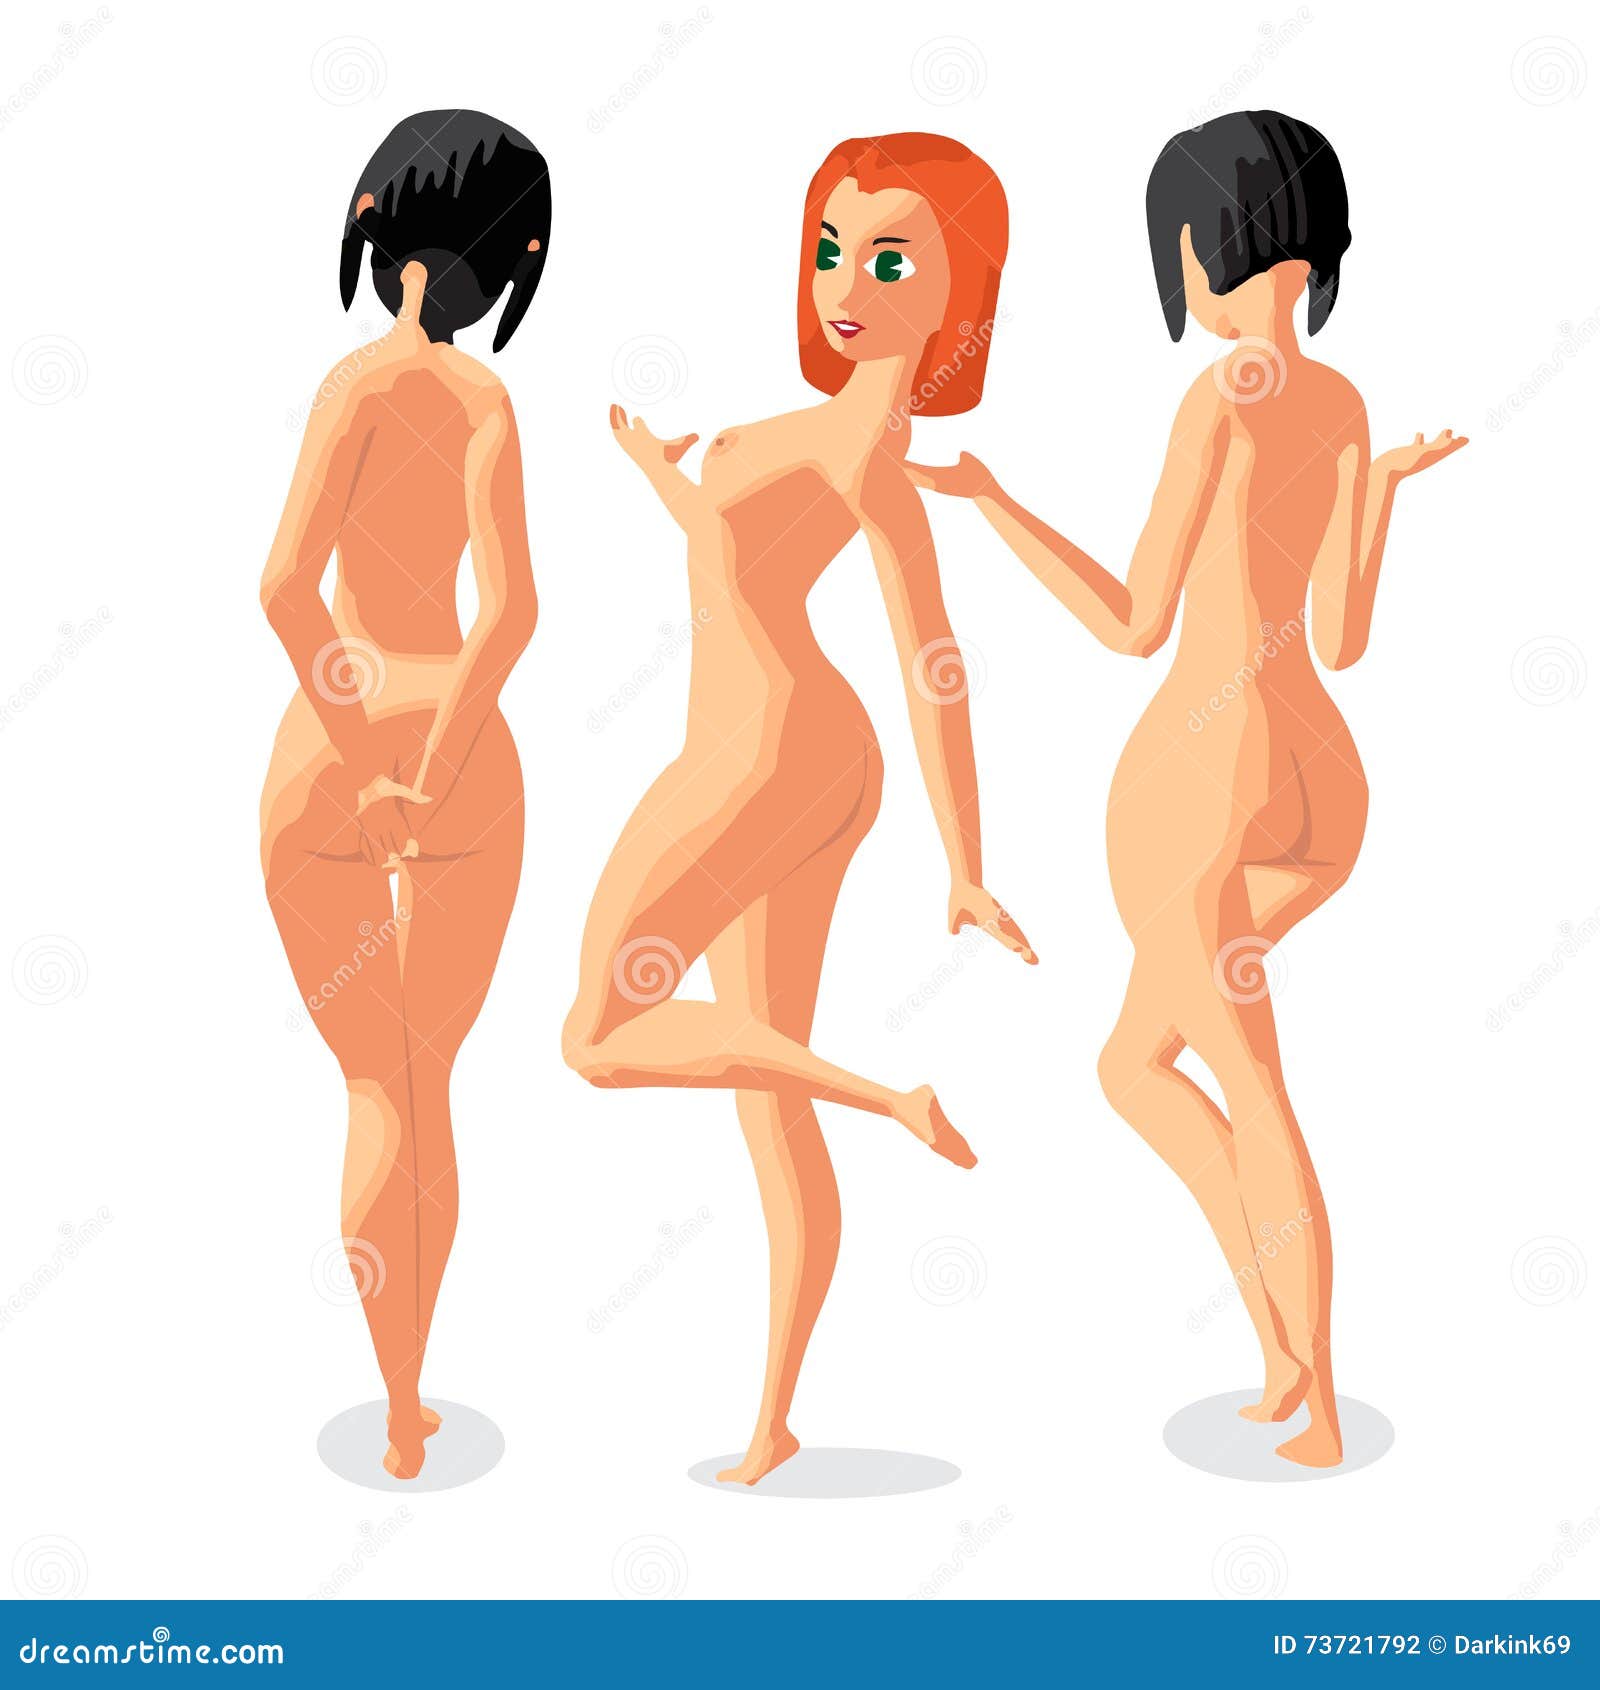 Three naked girls on the beach